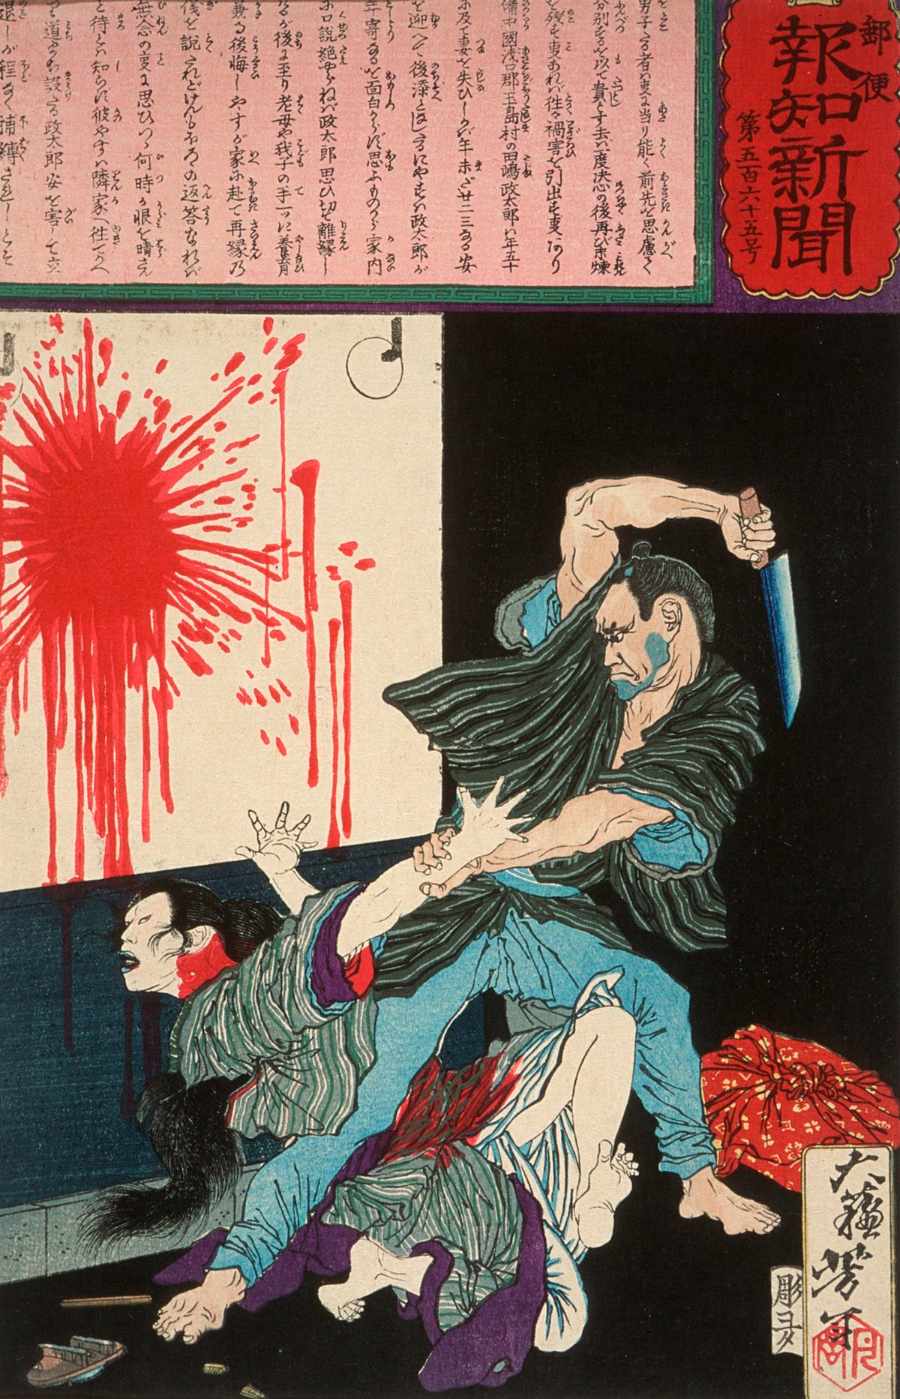 Tsukioka Yoshitoshi Color Woodblock Print blood splattered wall man wielding knife fearful woman